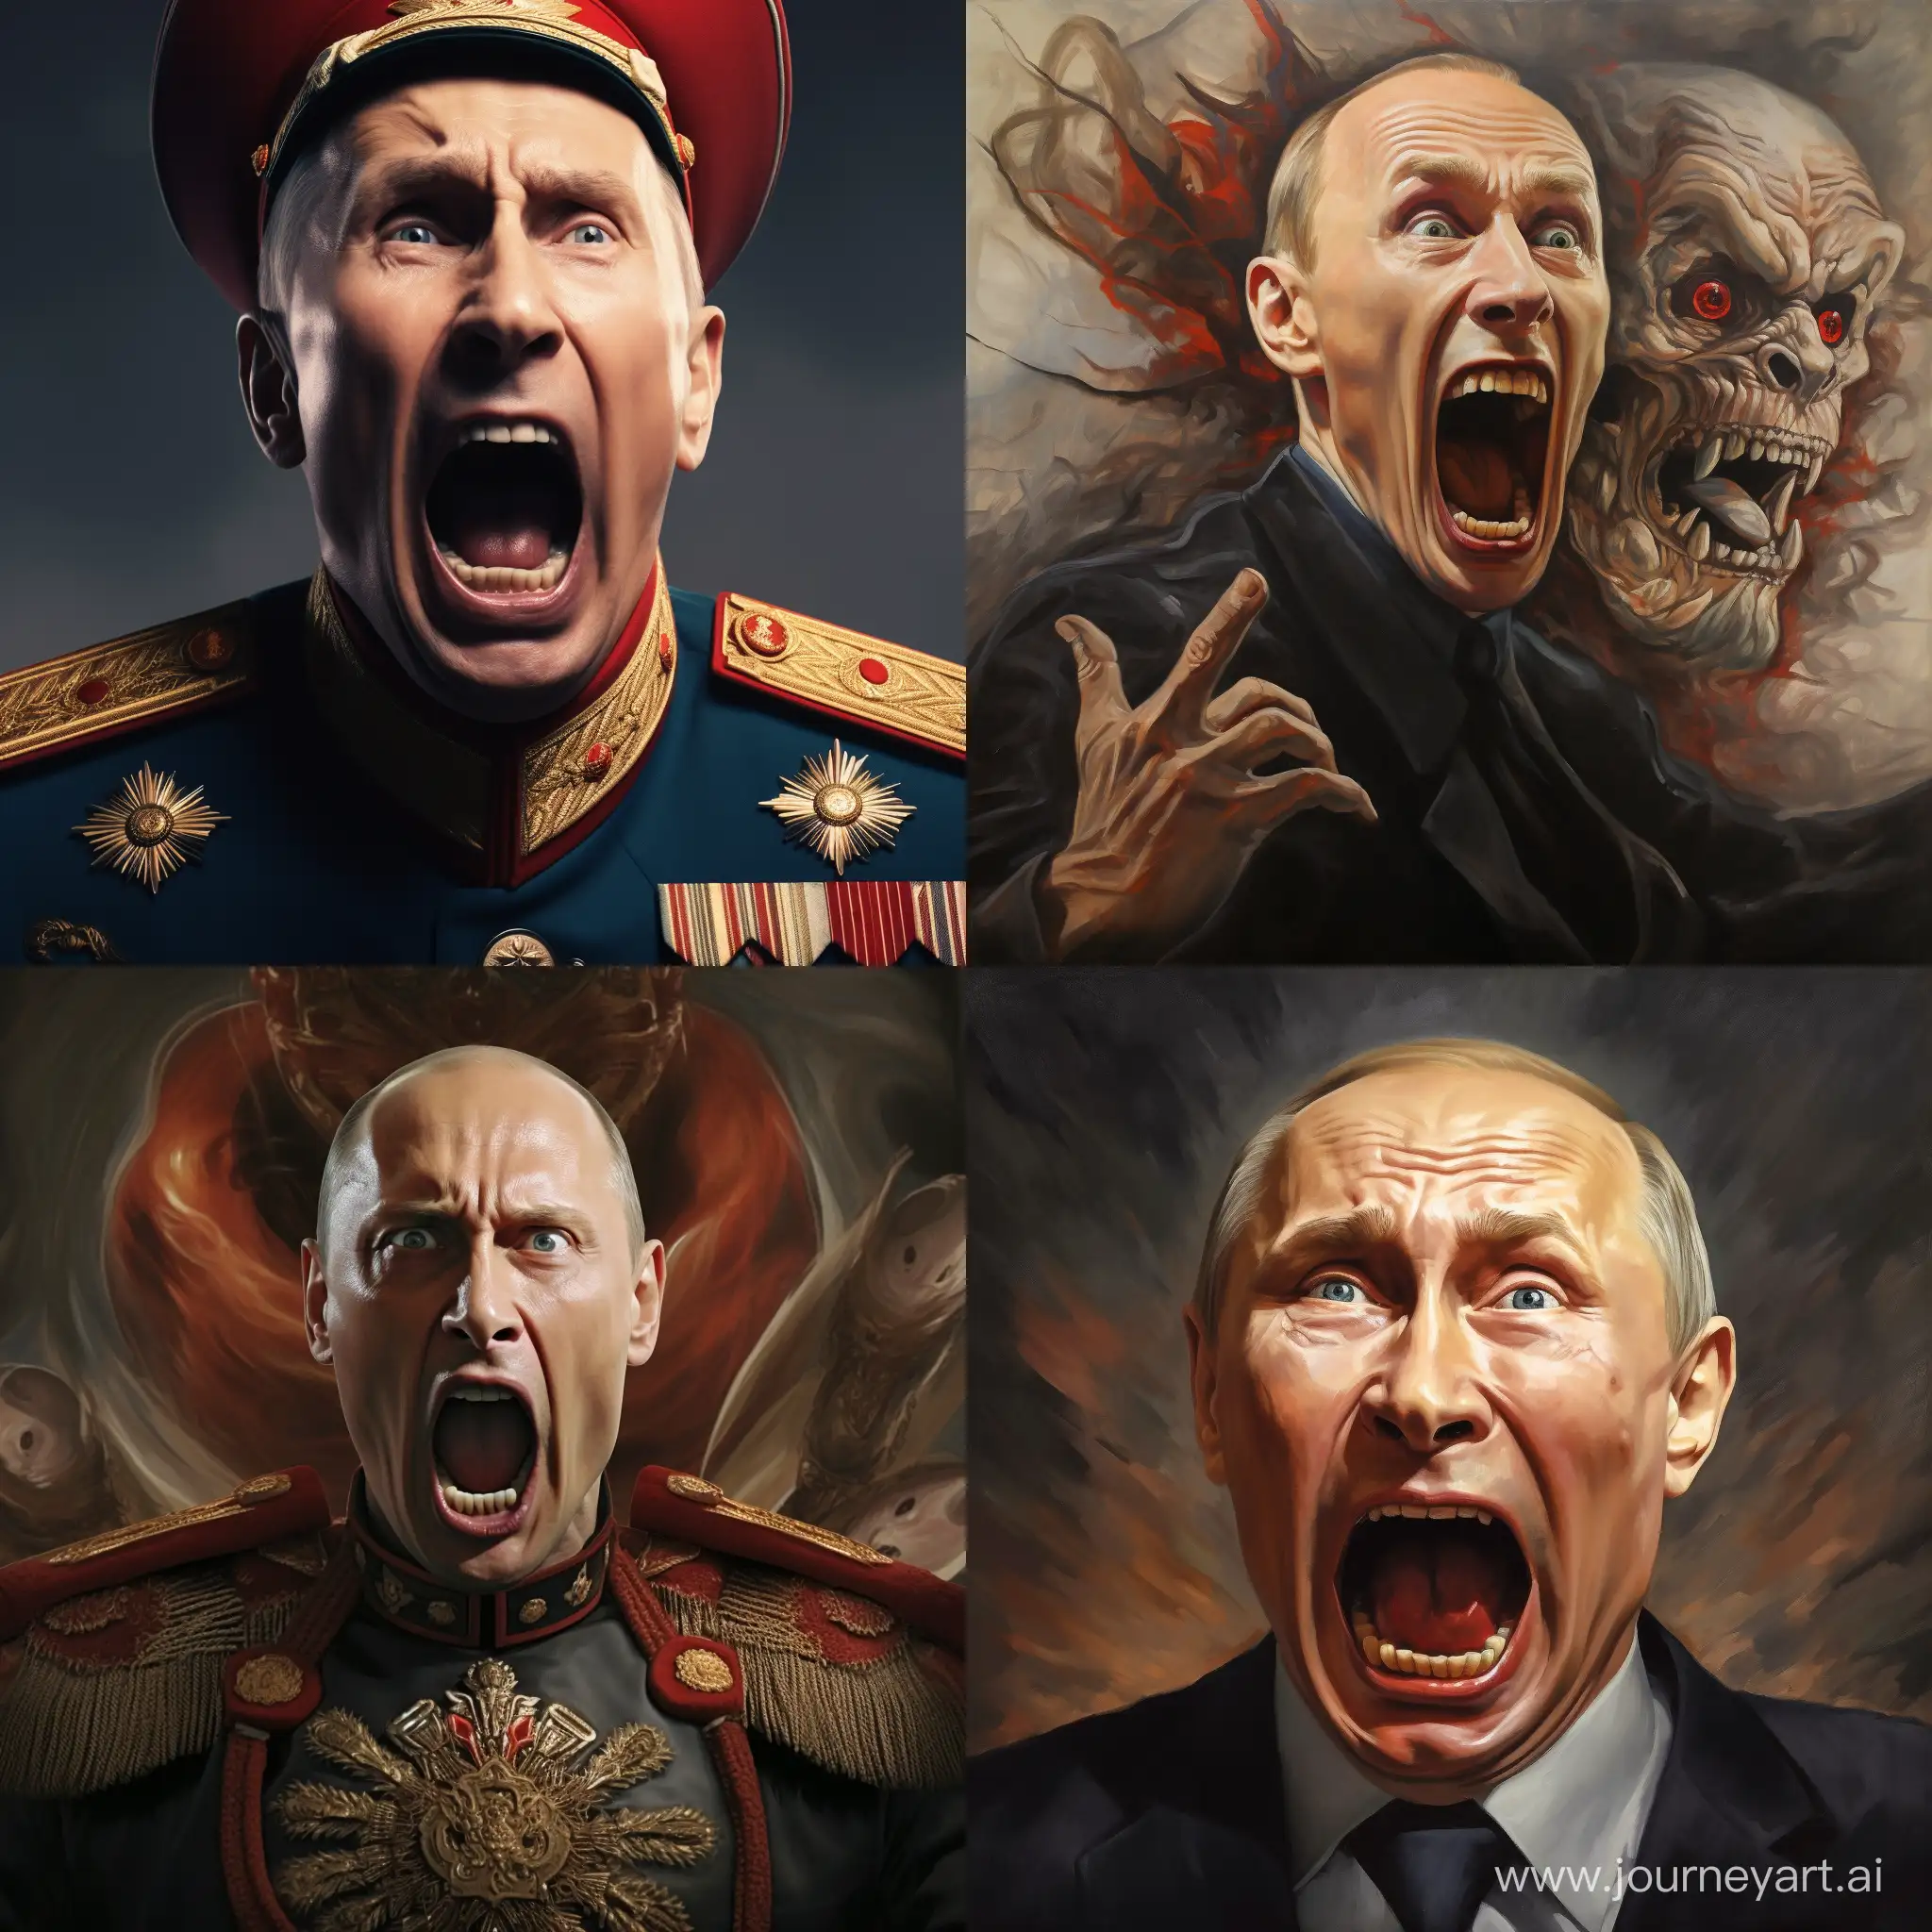 Vladimir-Putin-Shouts-GOYDA-in-Intense-Moment